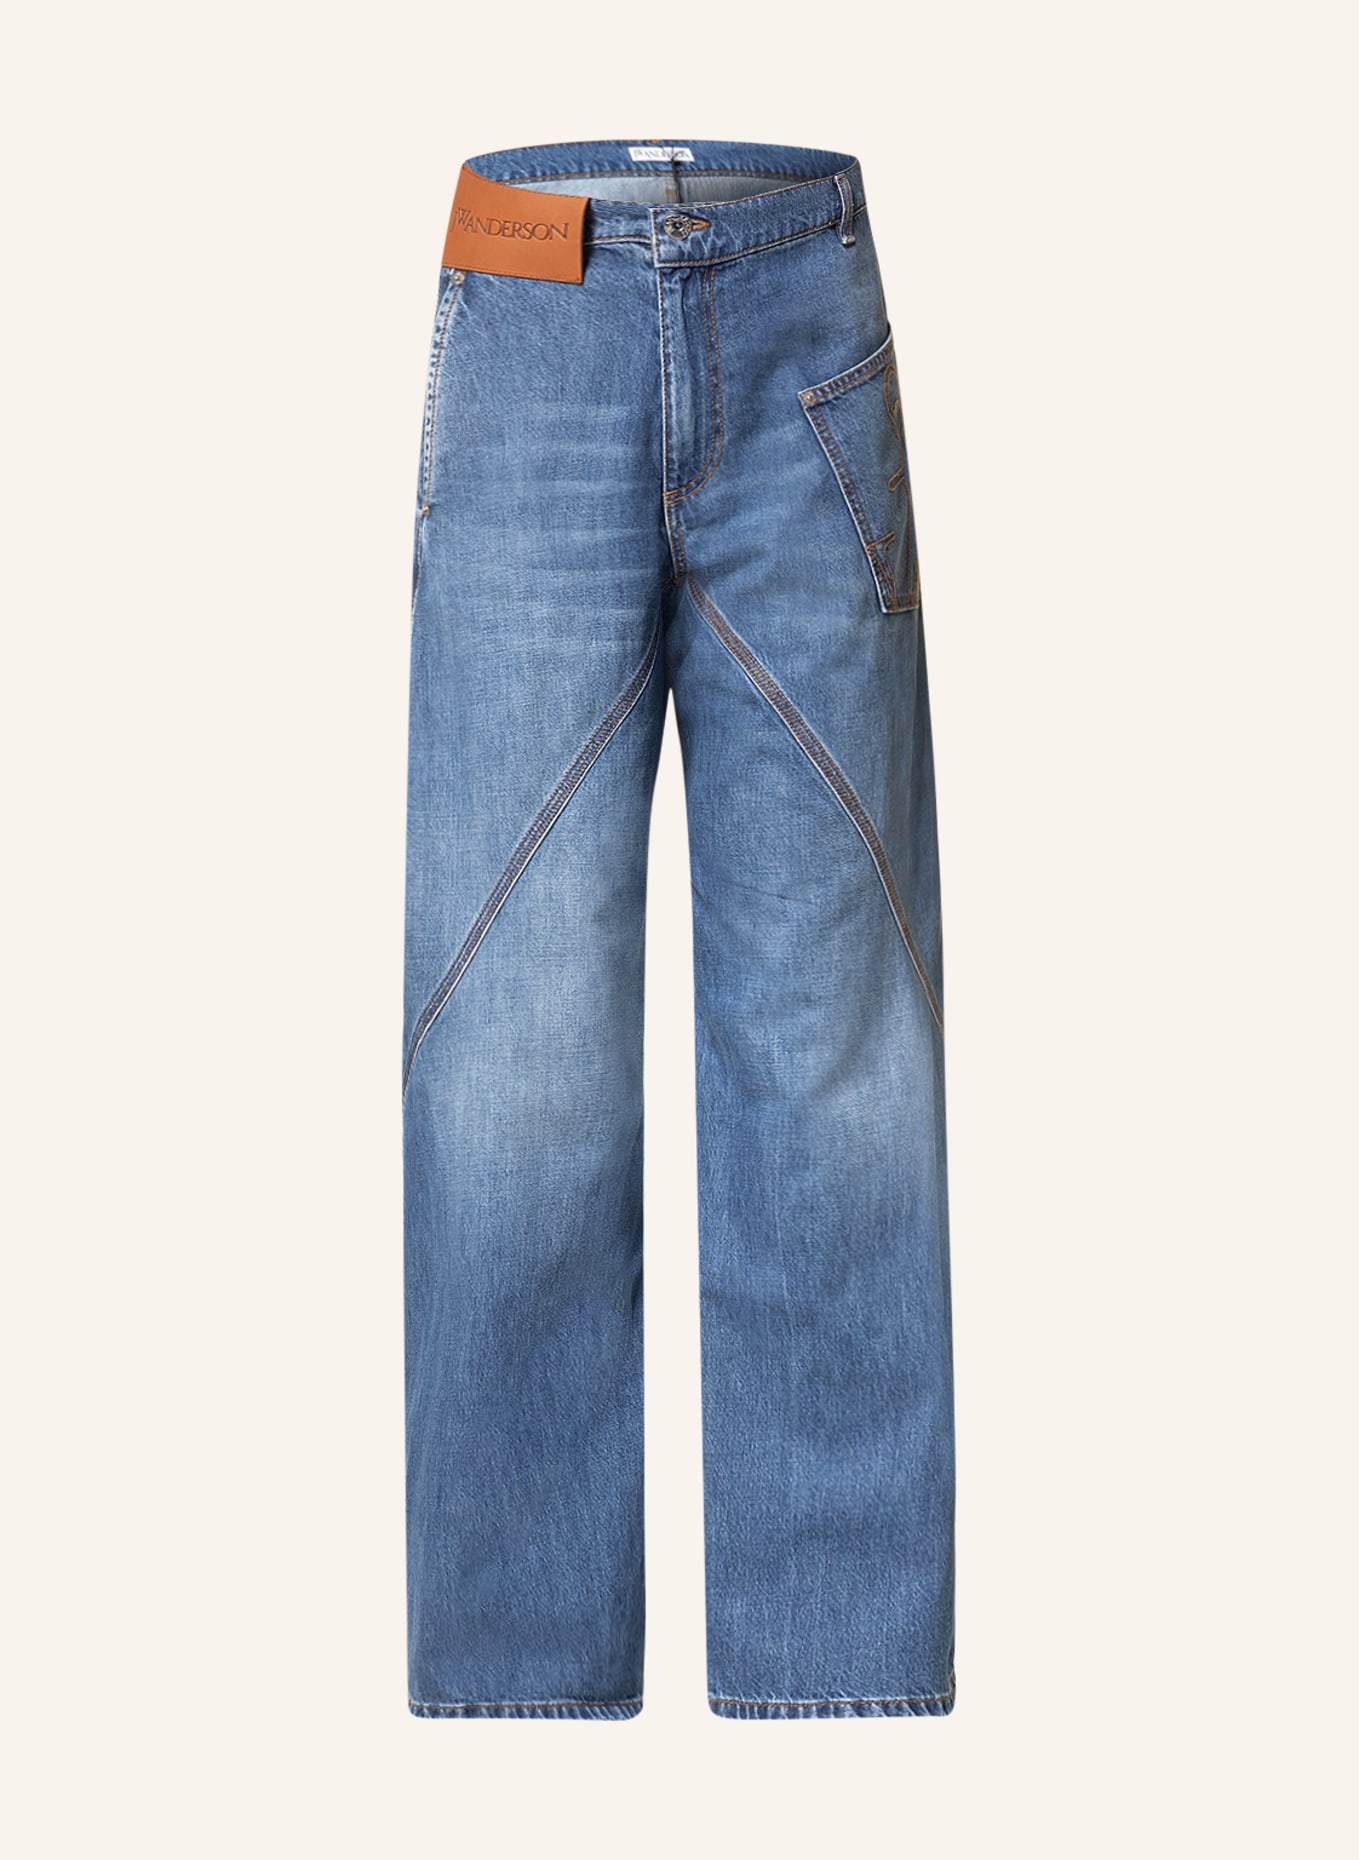 JW ANDERSON Jeans, Farbe: 804 LIGHT BLUE (Bild 1)